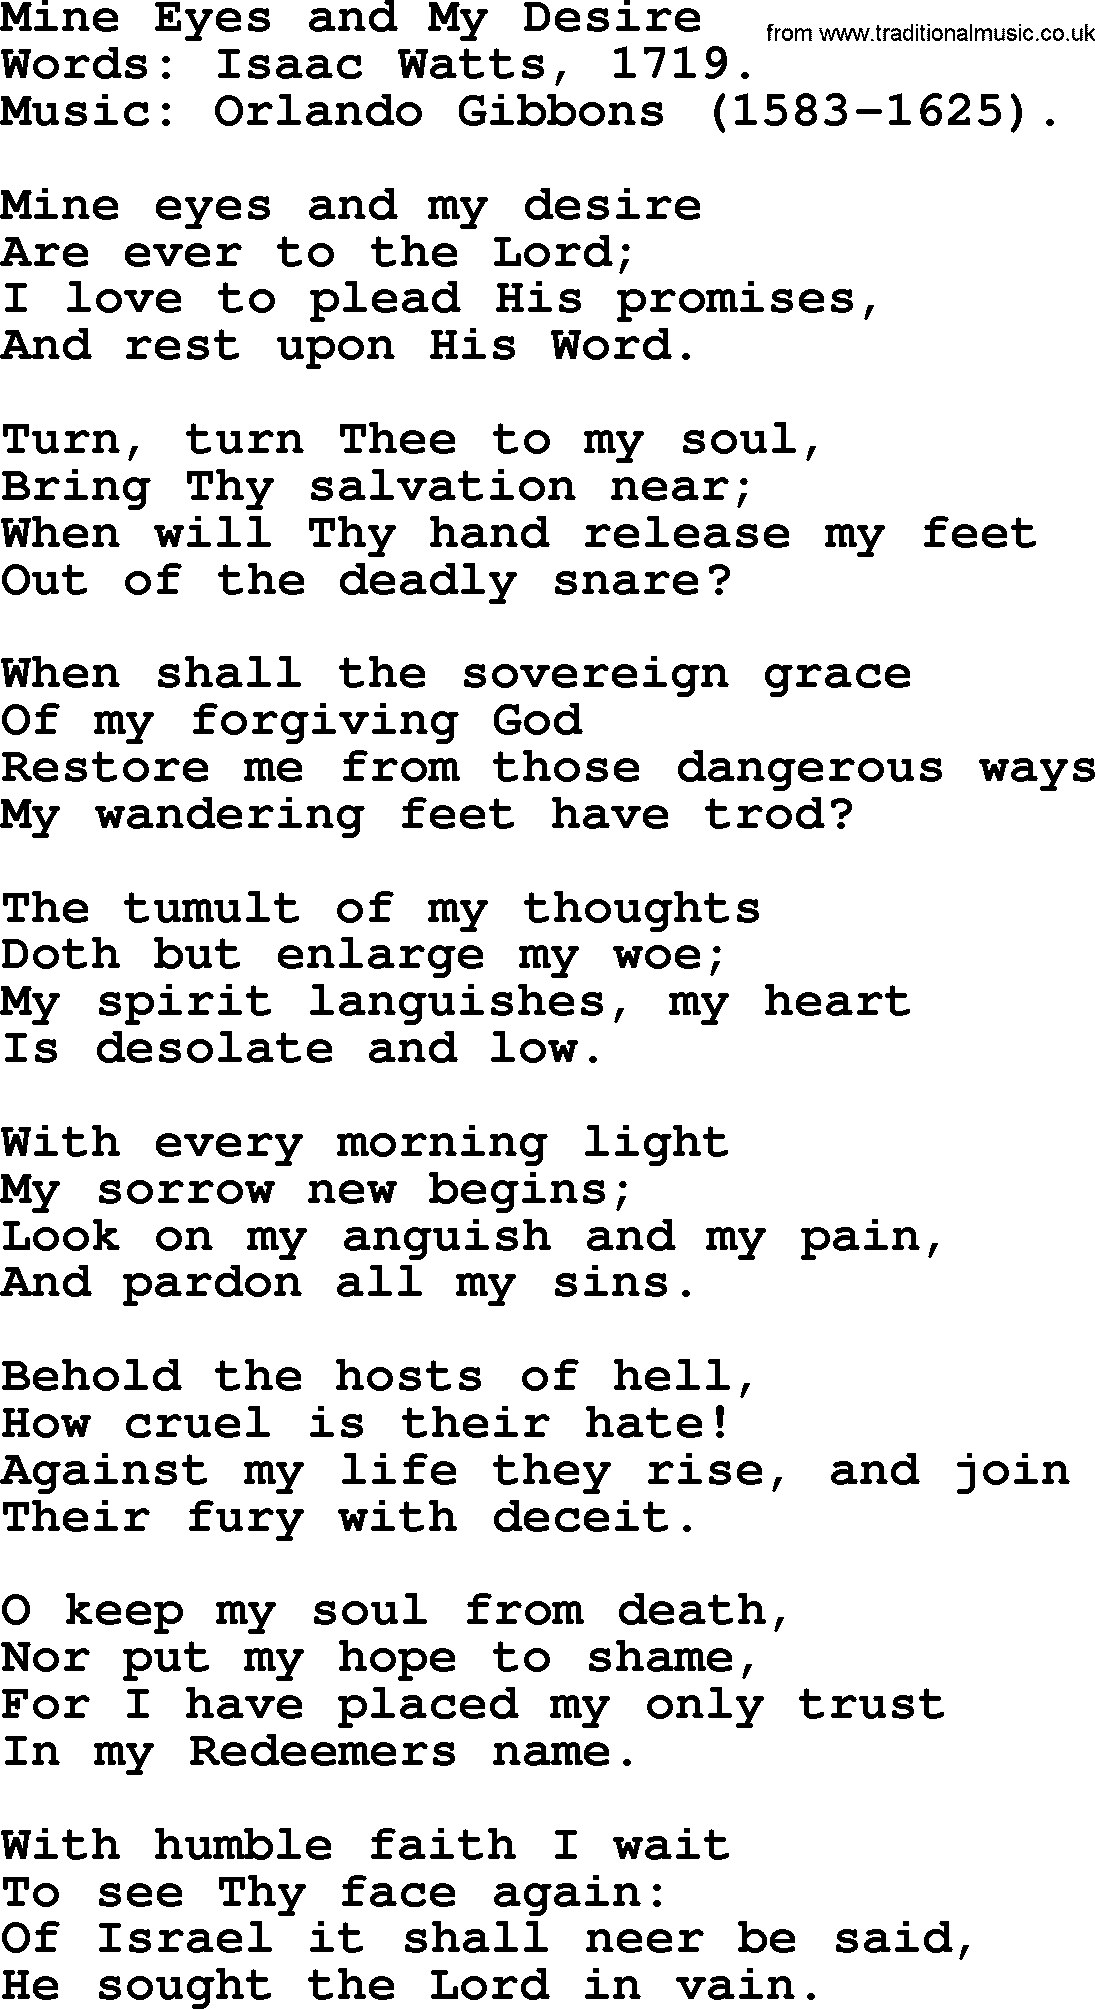 Isaac Watts Christian hymn: Mine Eyes and My Desire- lyricss